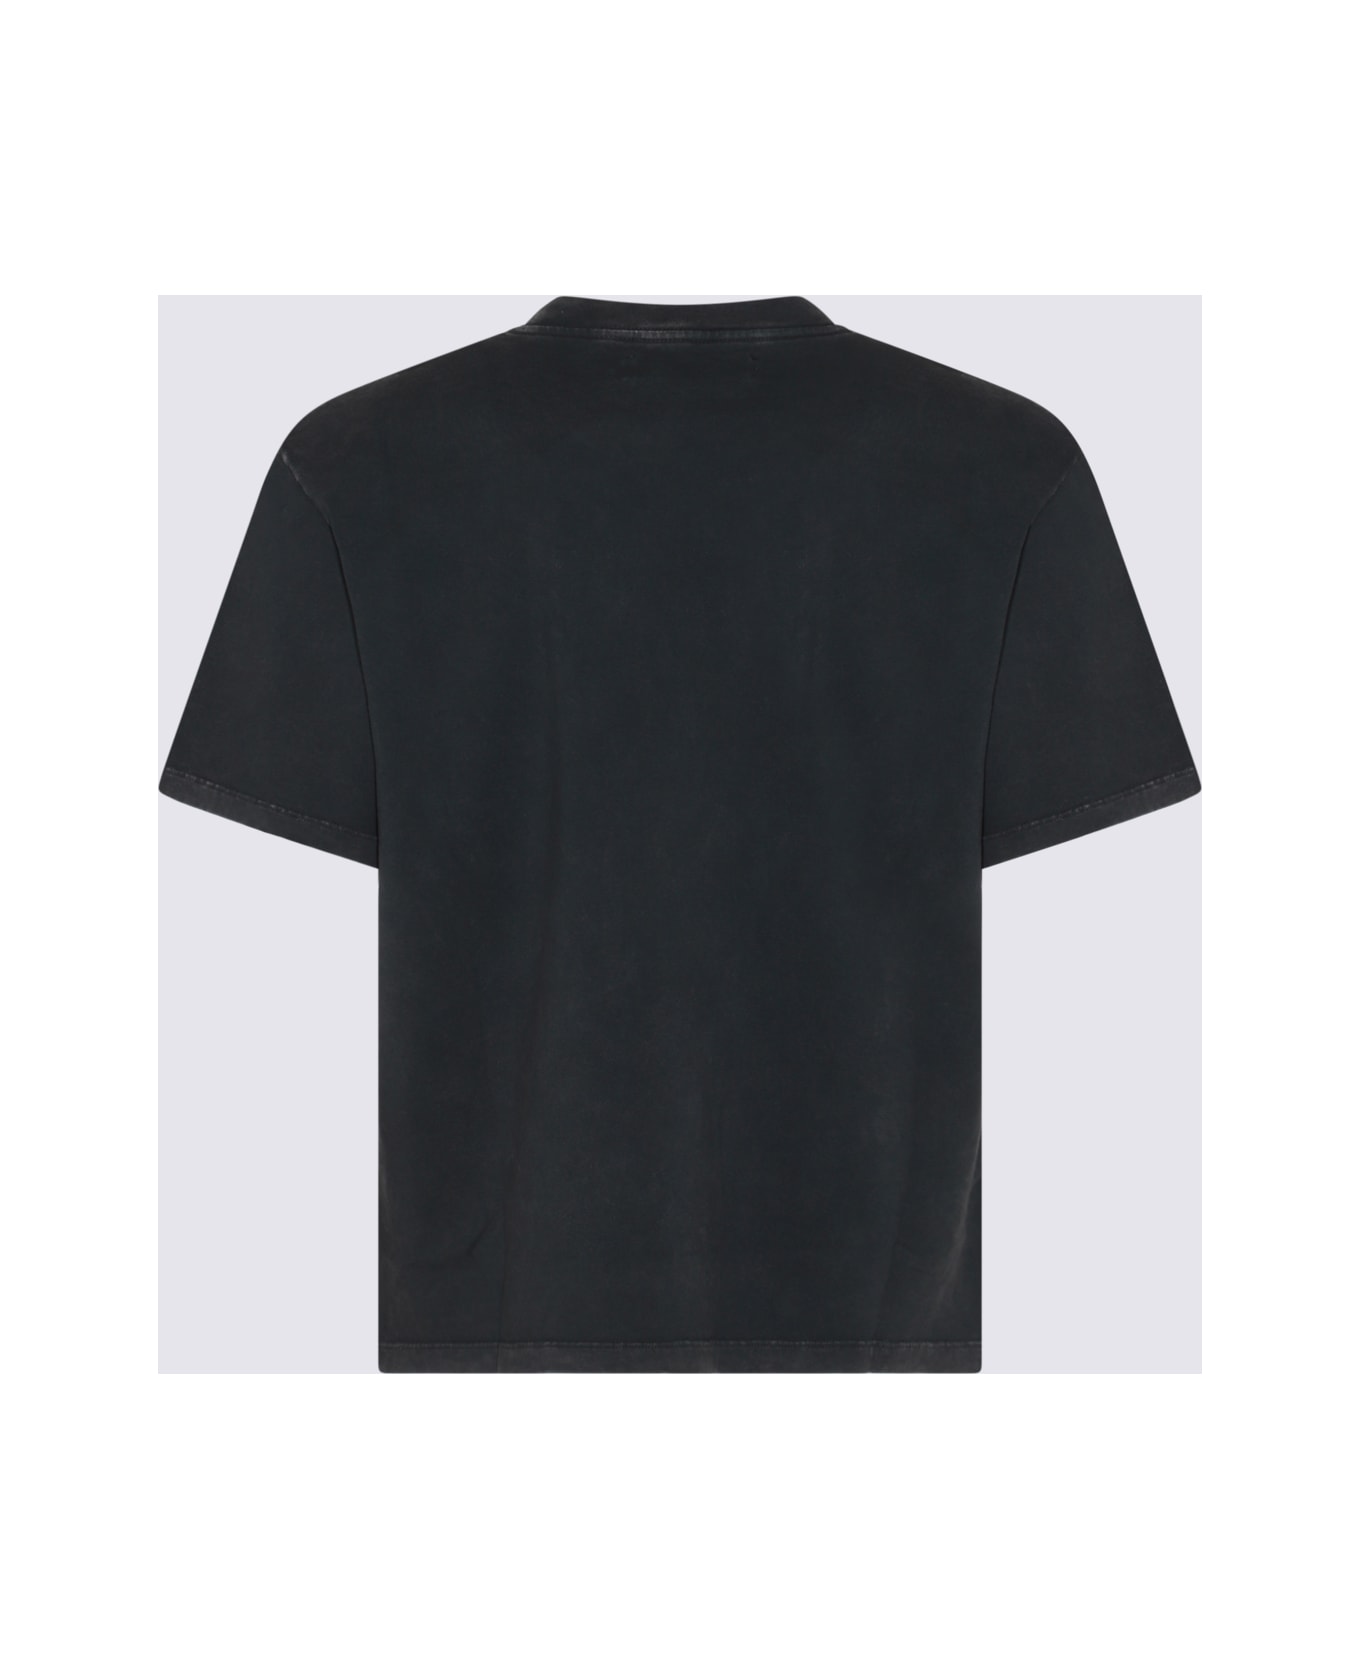 AMIRI Black Cotton T-shirt - Black